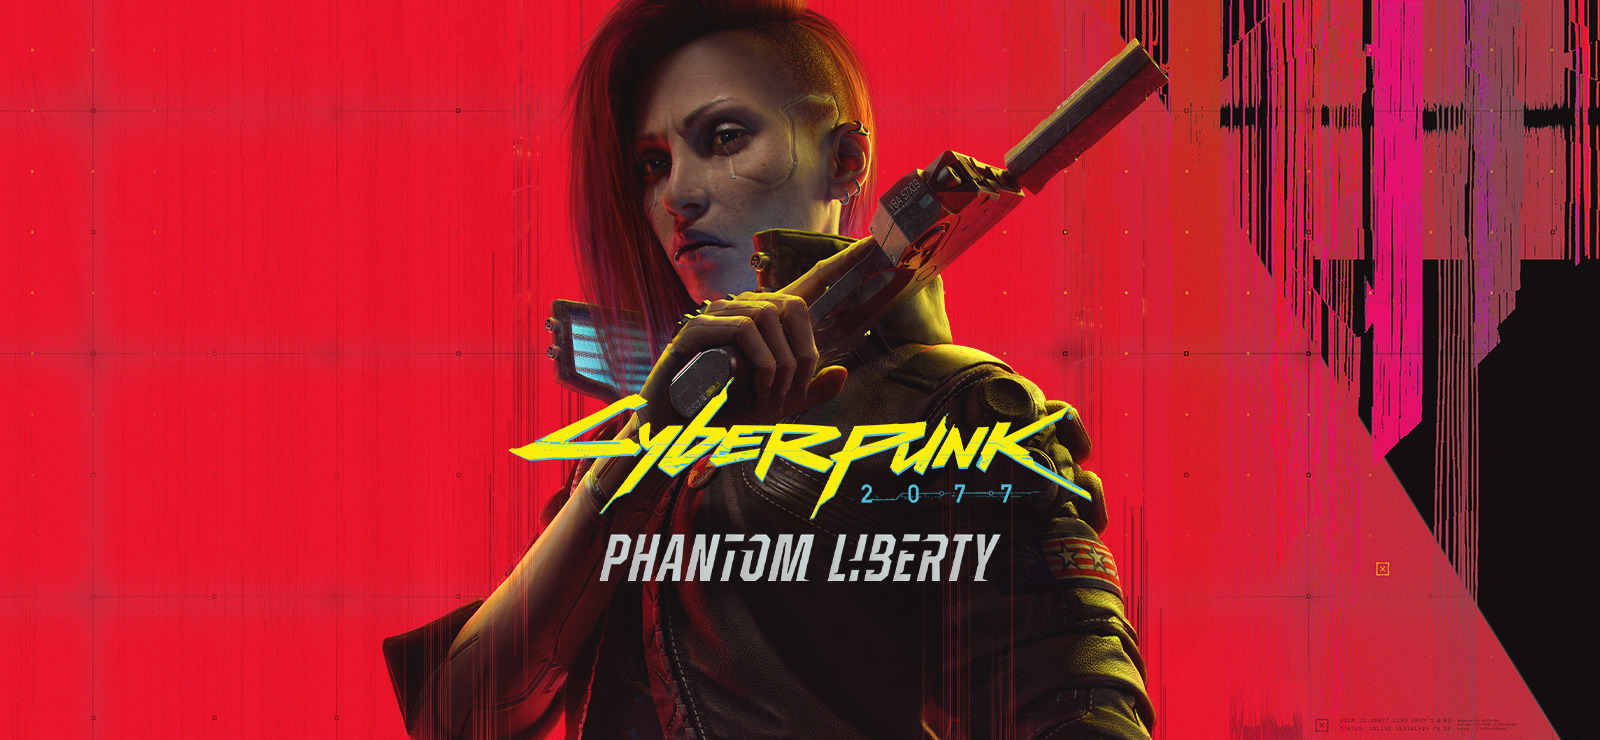 Cyberpunk 2077: Phantom Liberty on